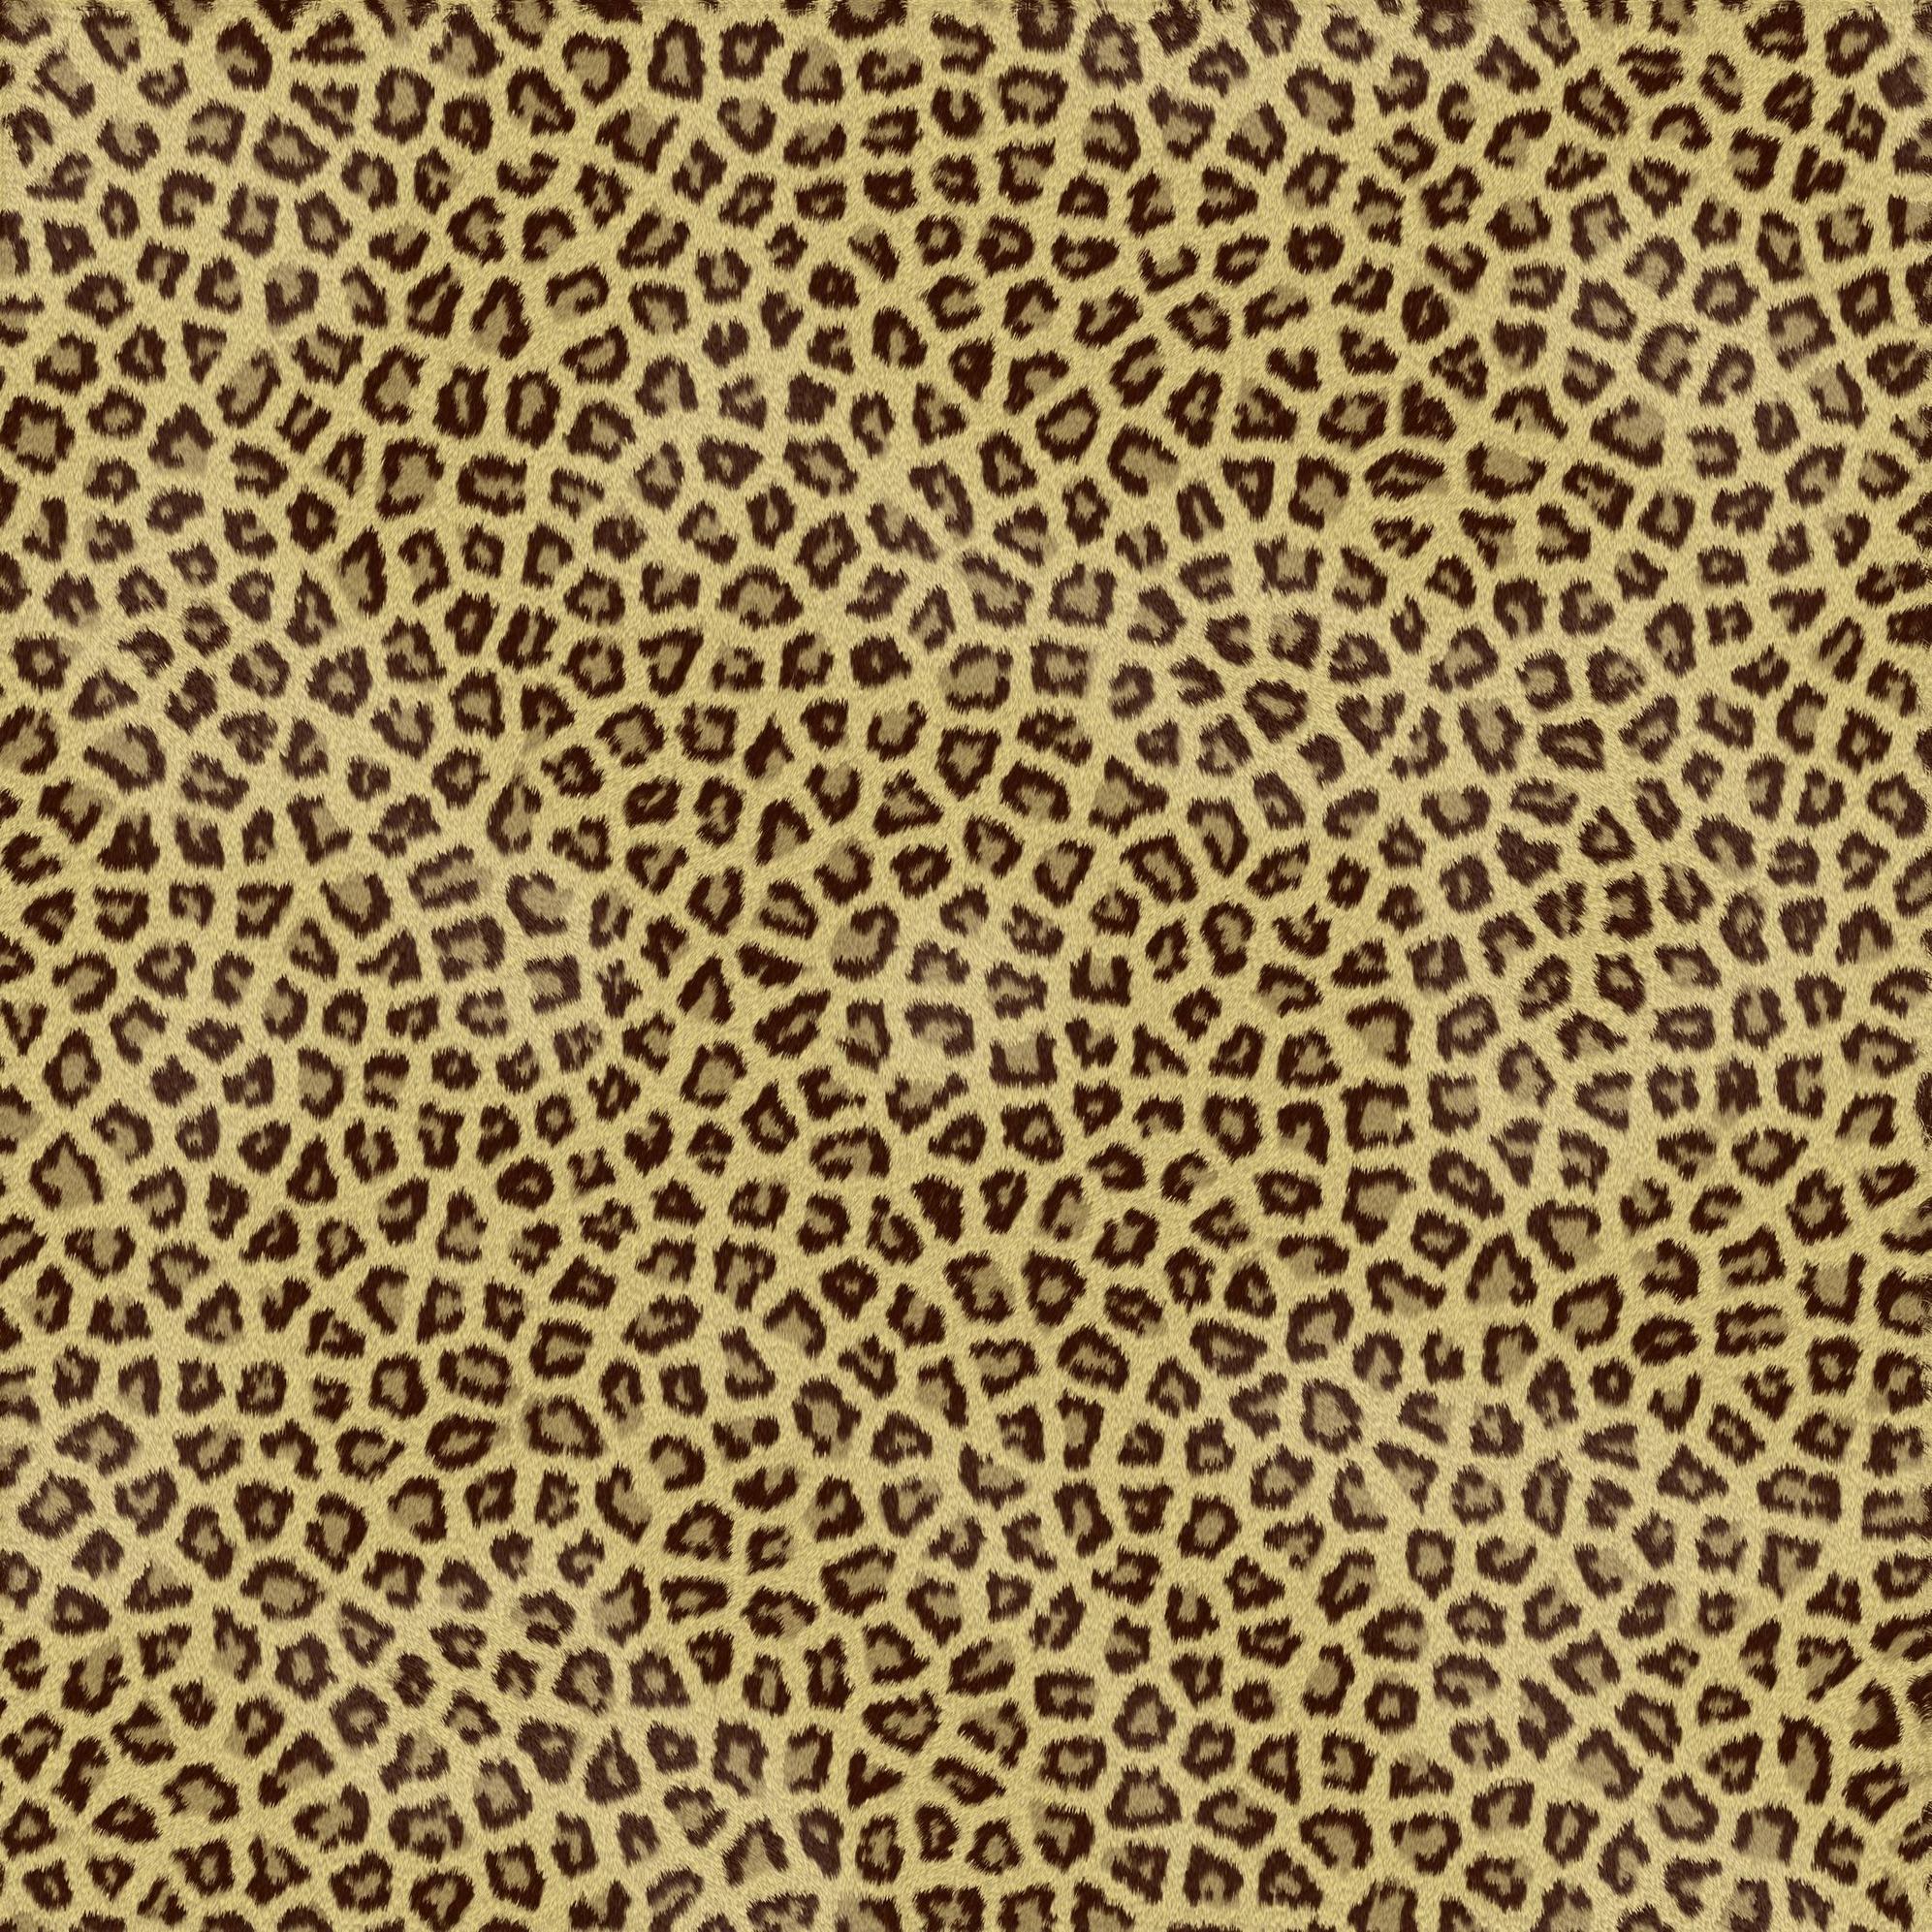 Animals For > Apple Cheetah Print Desktop Wallpaper